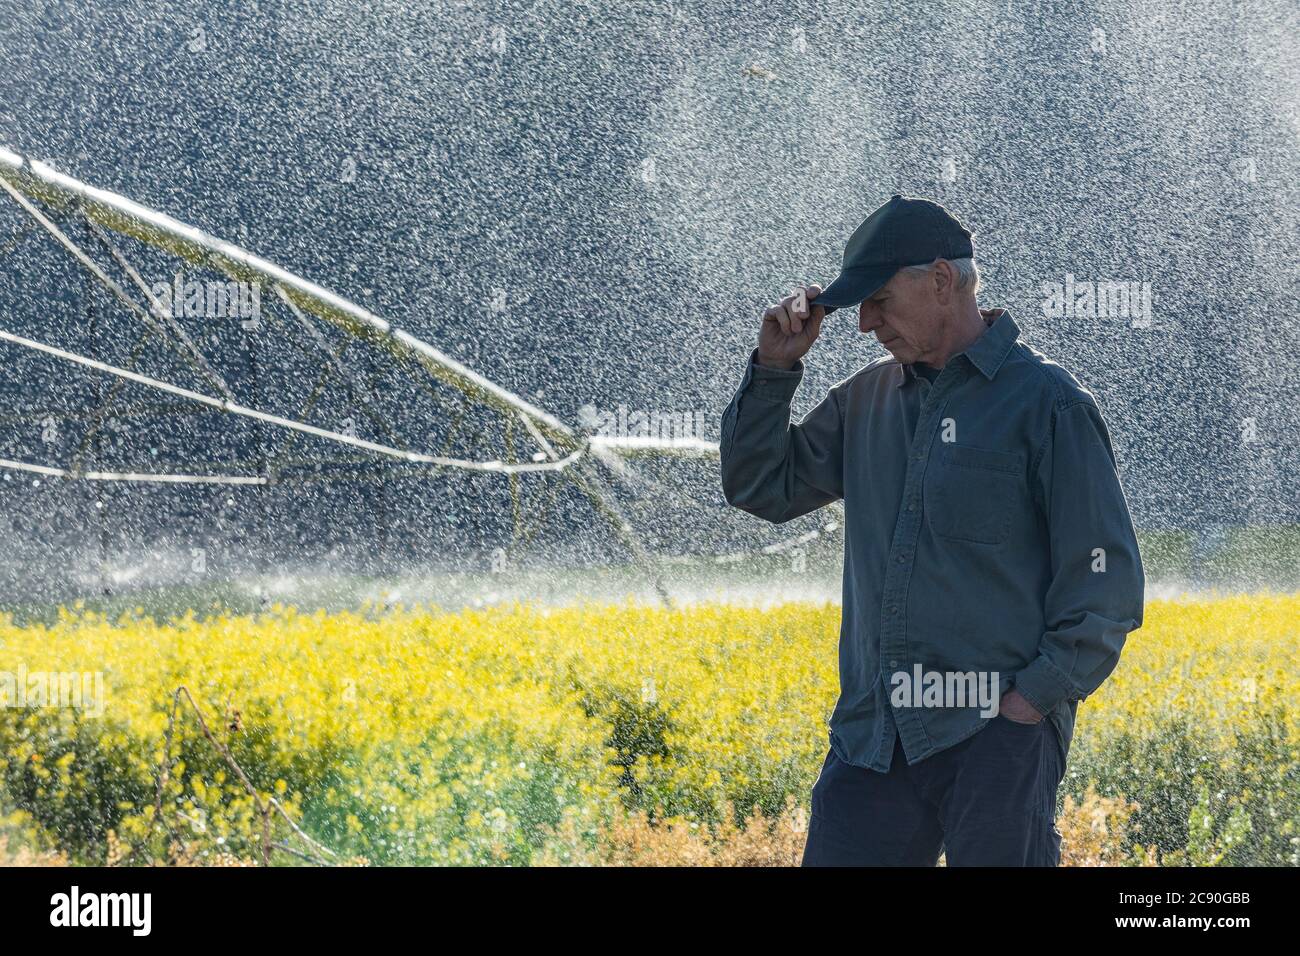 USA, Idaho, Sun Valley, Farmer standing in mustard field during irrigation Stock Photo